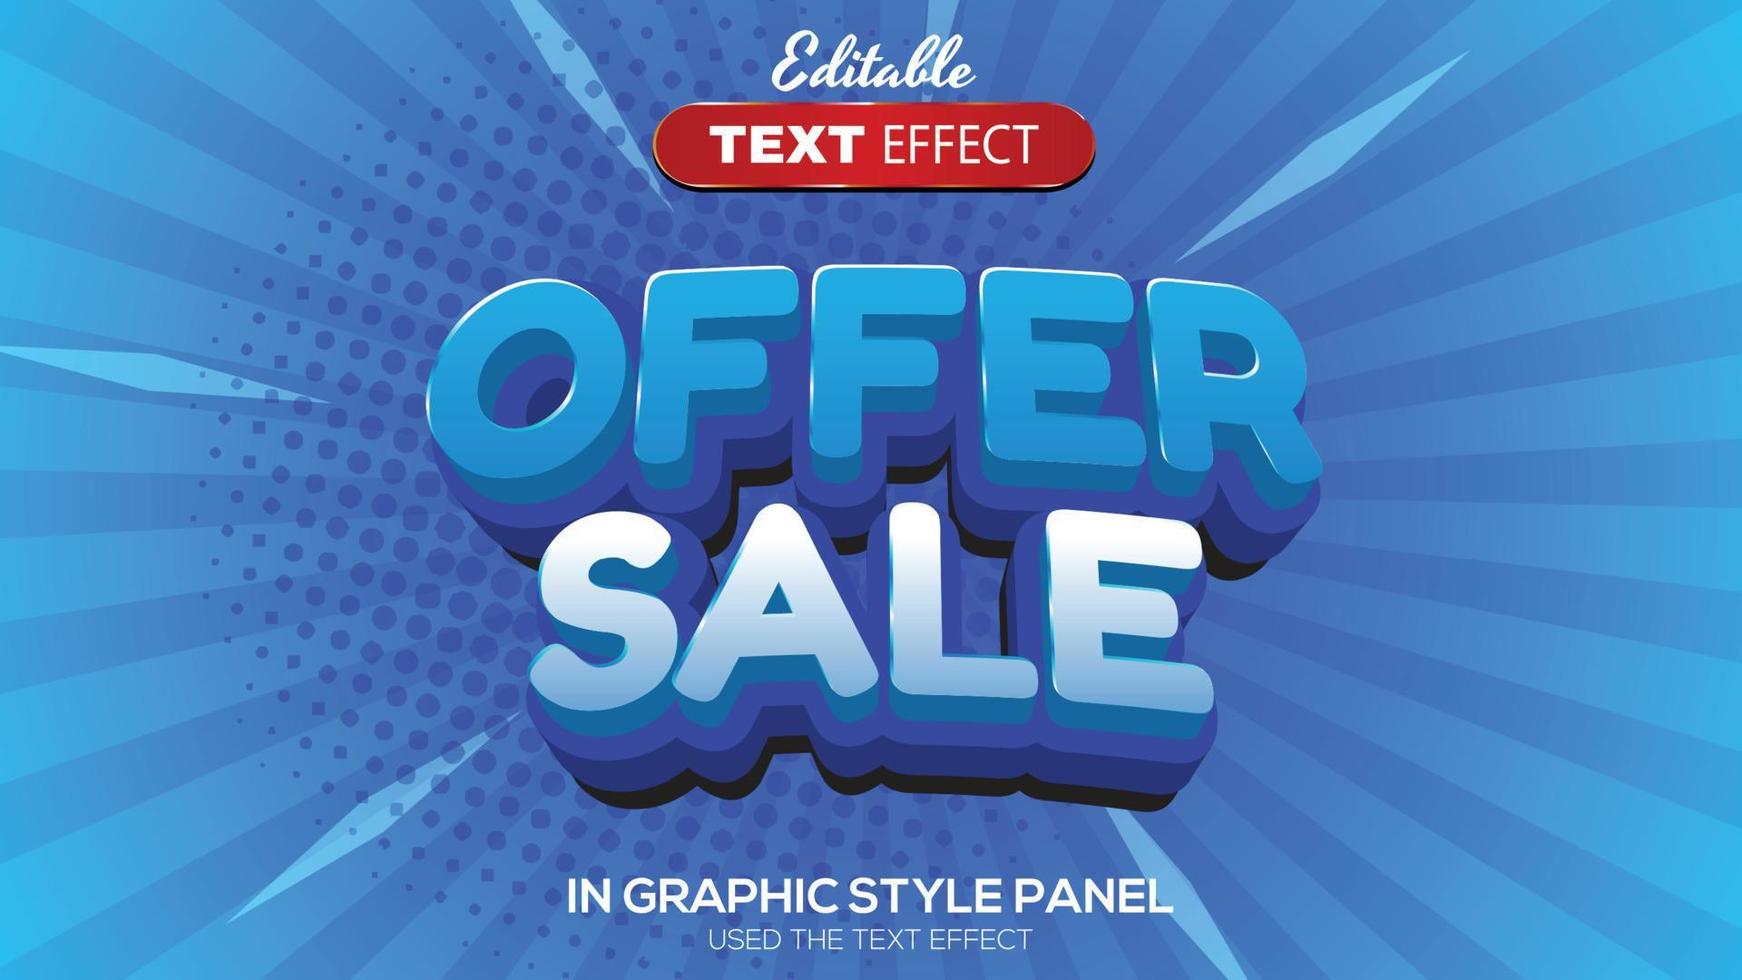 3D editable text effect offer sale theme vector